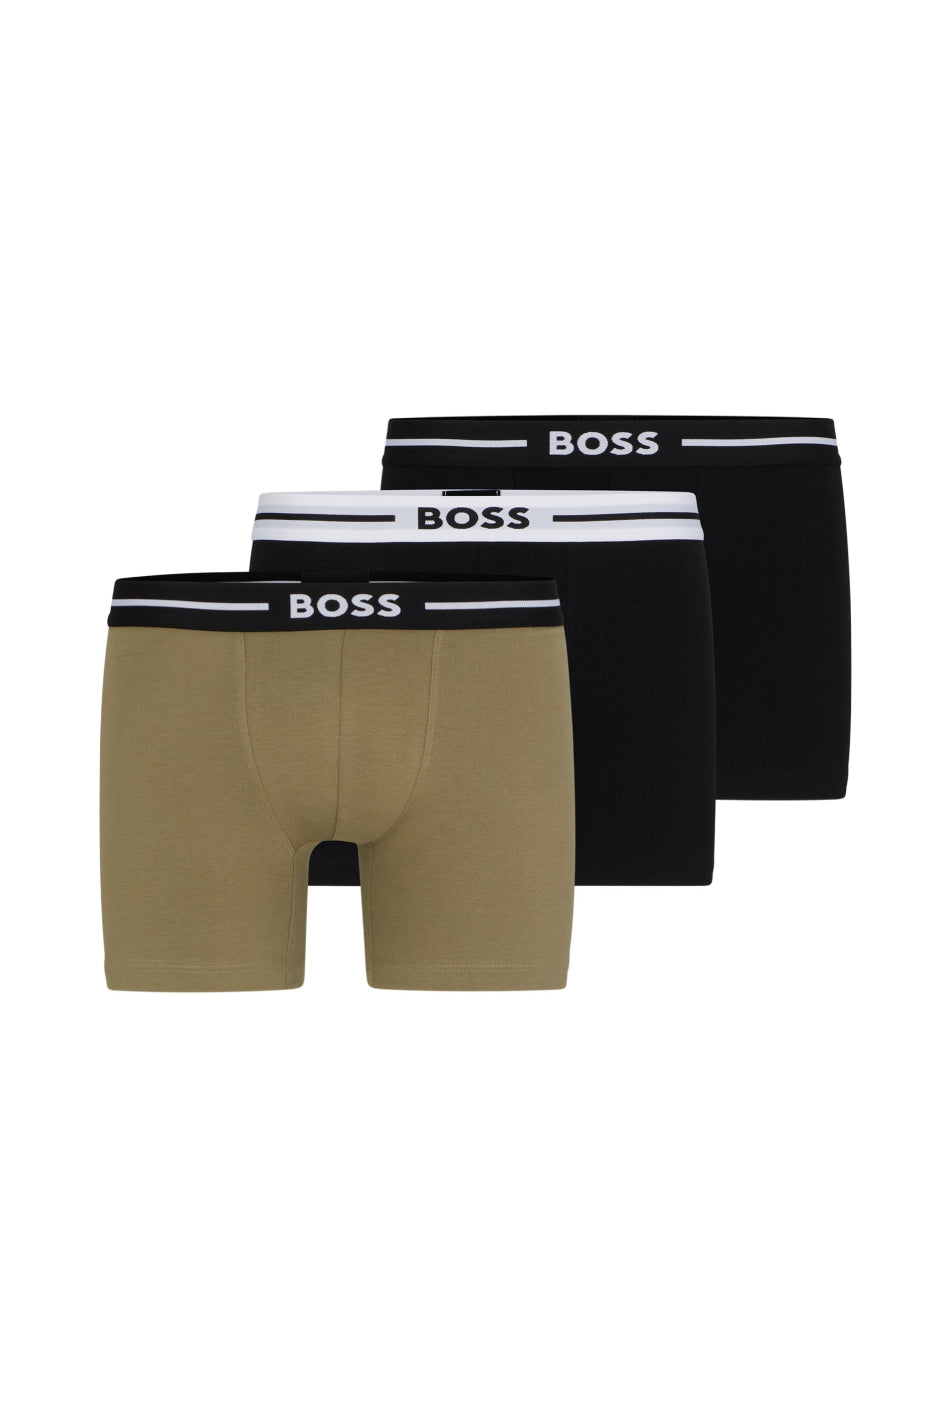 BOSS 3 Pack Men's Bold Boxer Brief